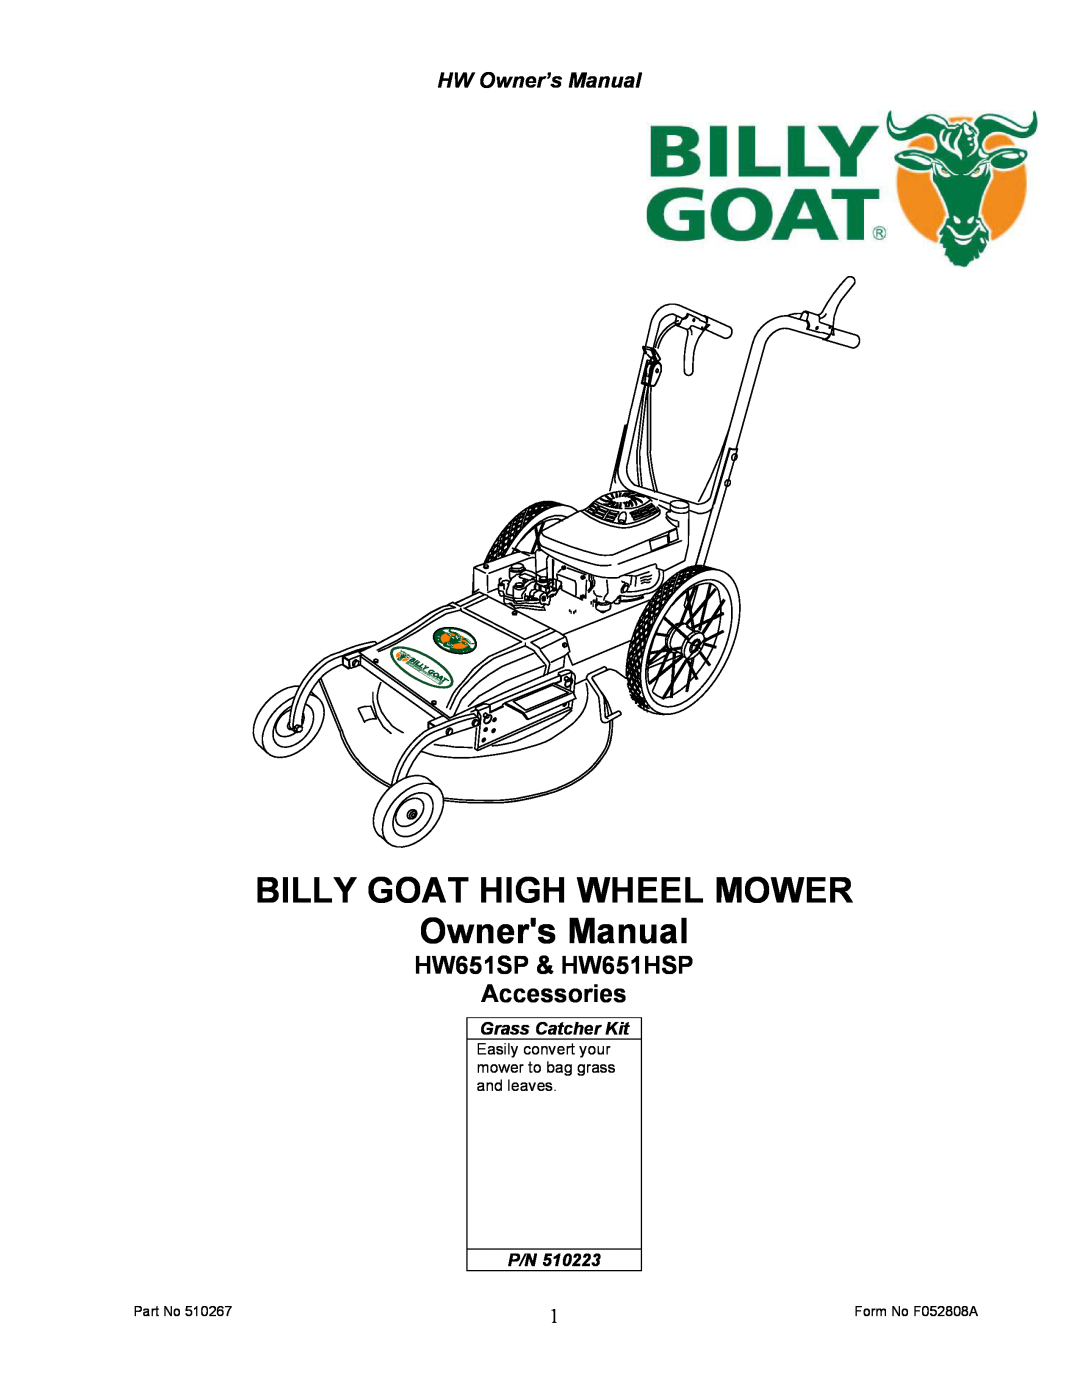 Billy Goat owner manual HW651SP & HW651HSP Accessories, Grass Catcher Kit, Highw 